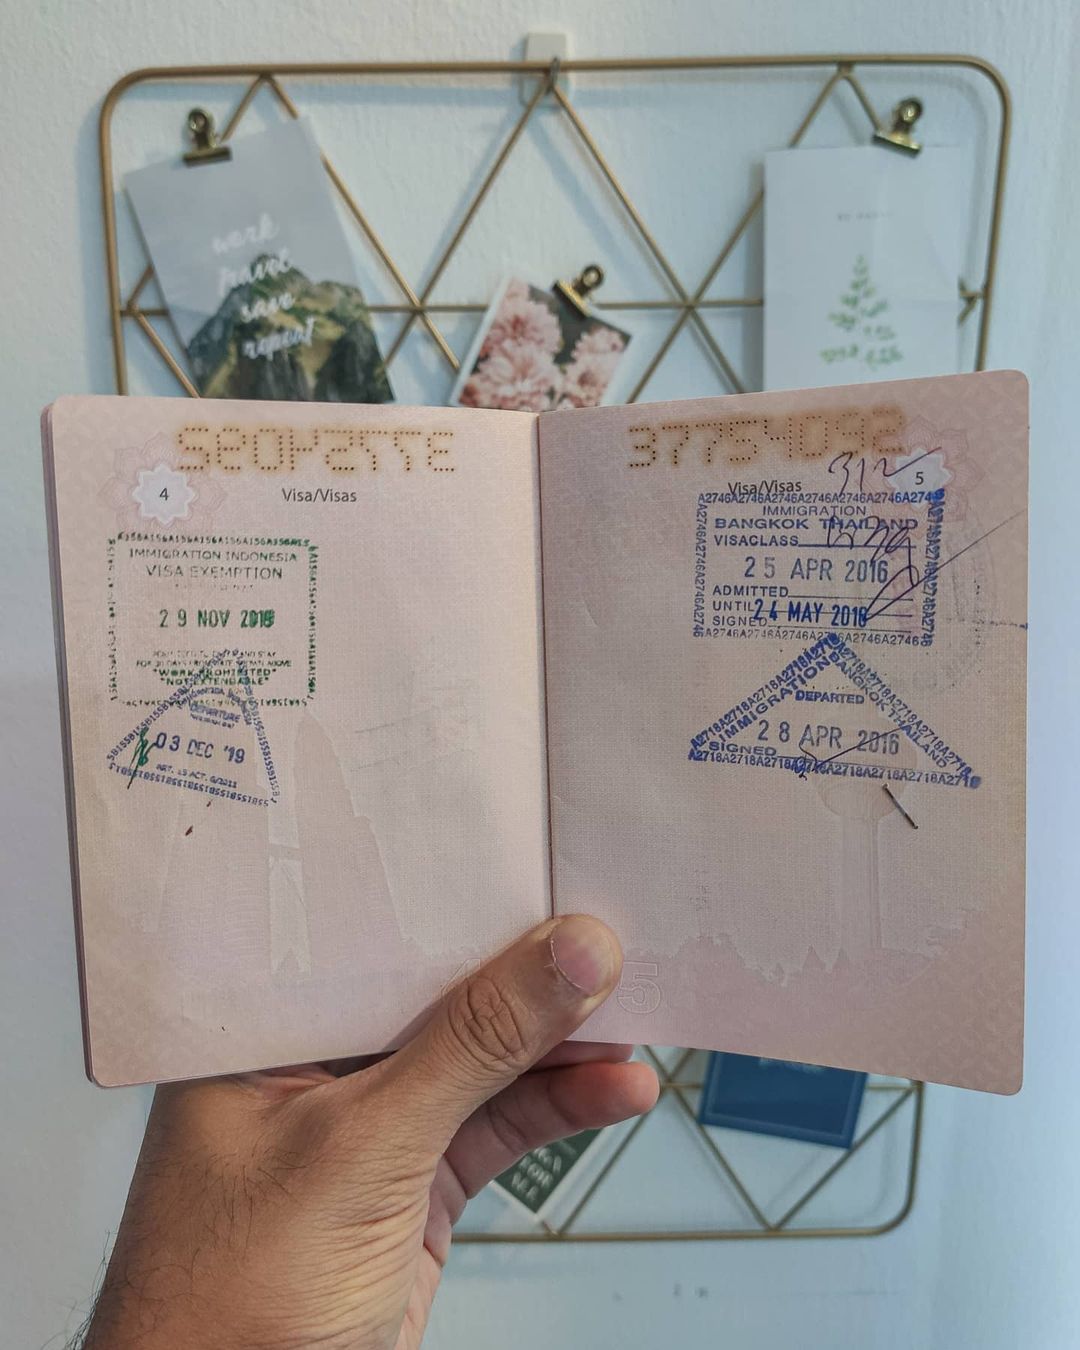 Inside the Malaysia's passport